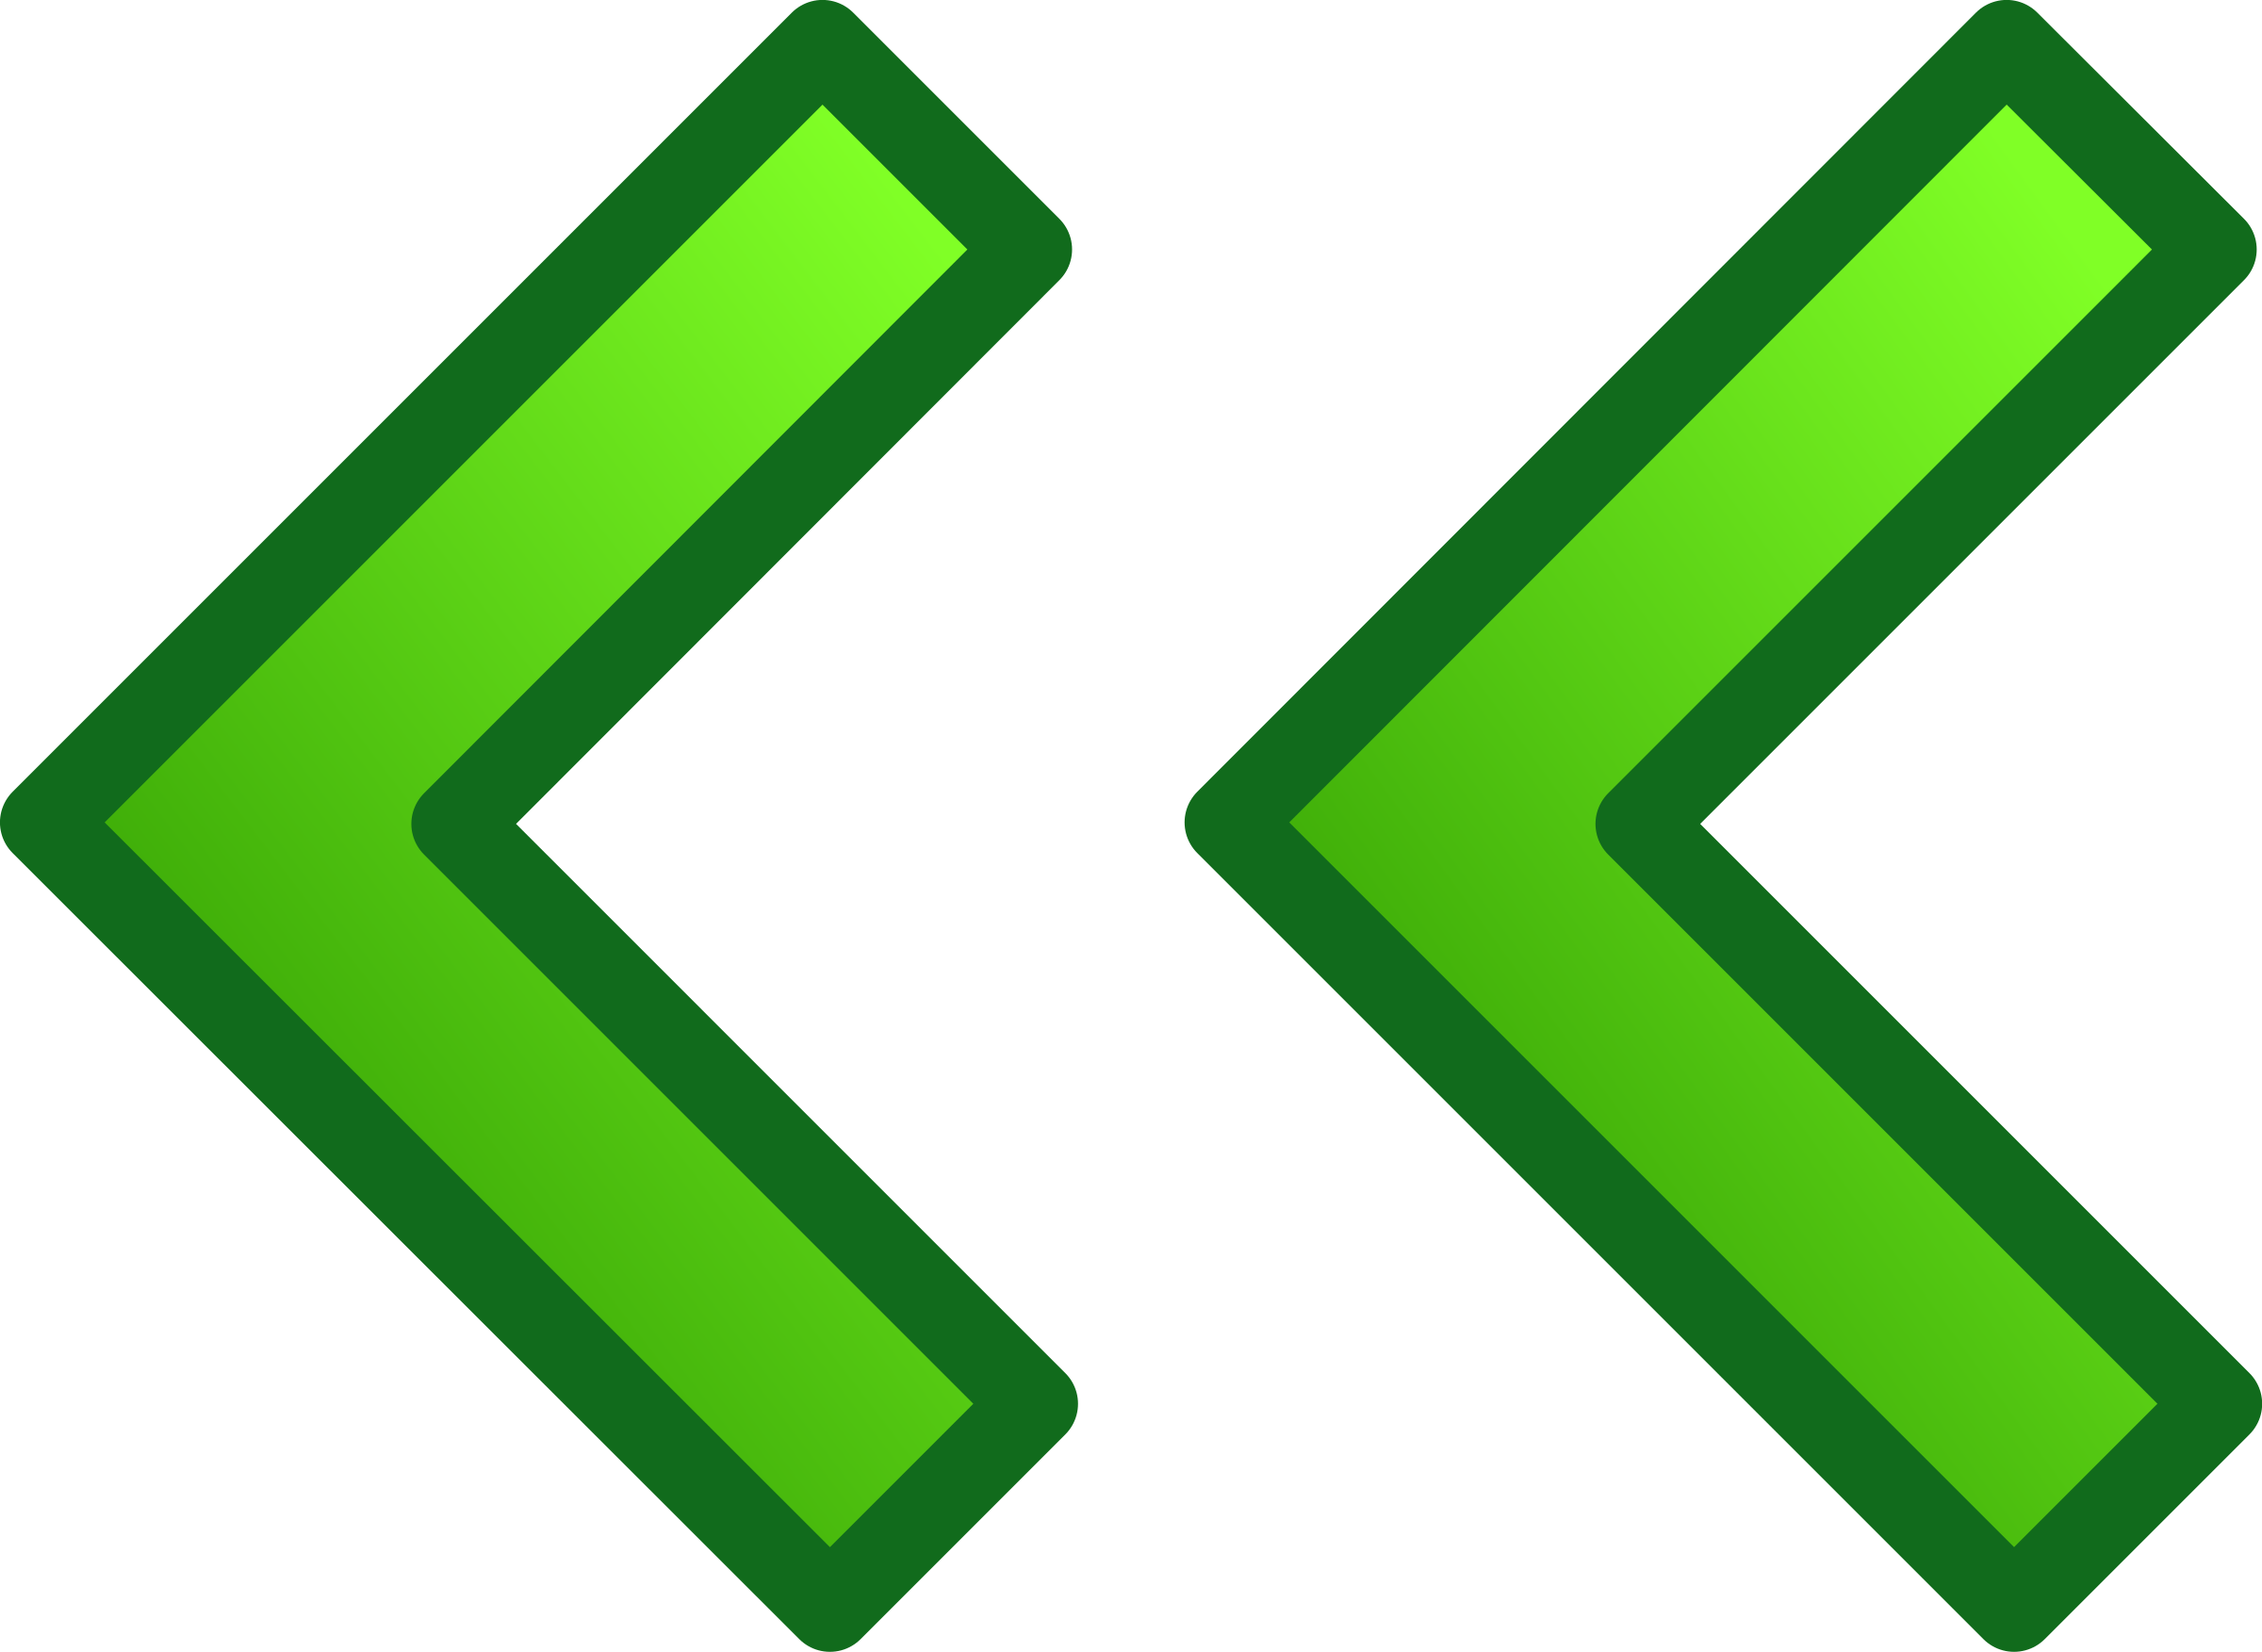 Clipart - green double arrows set